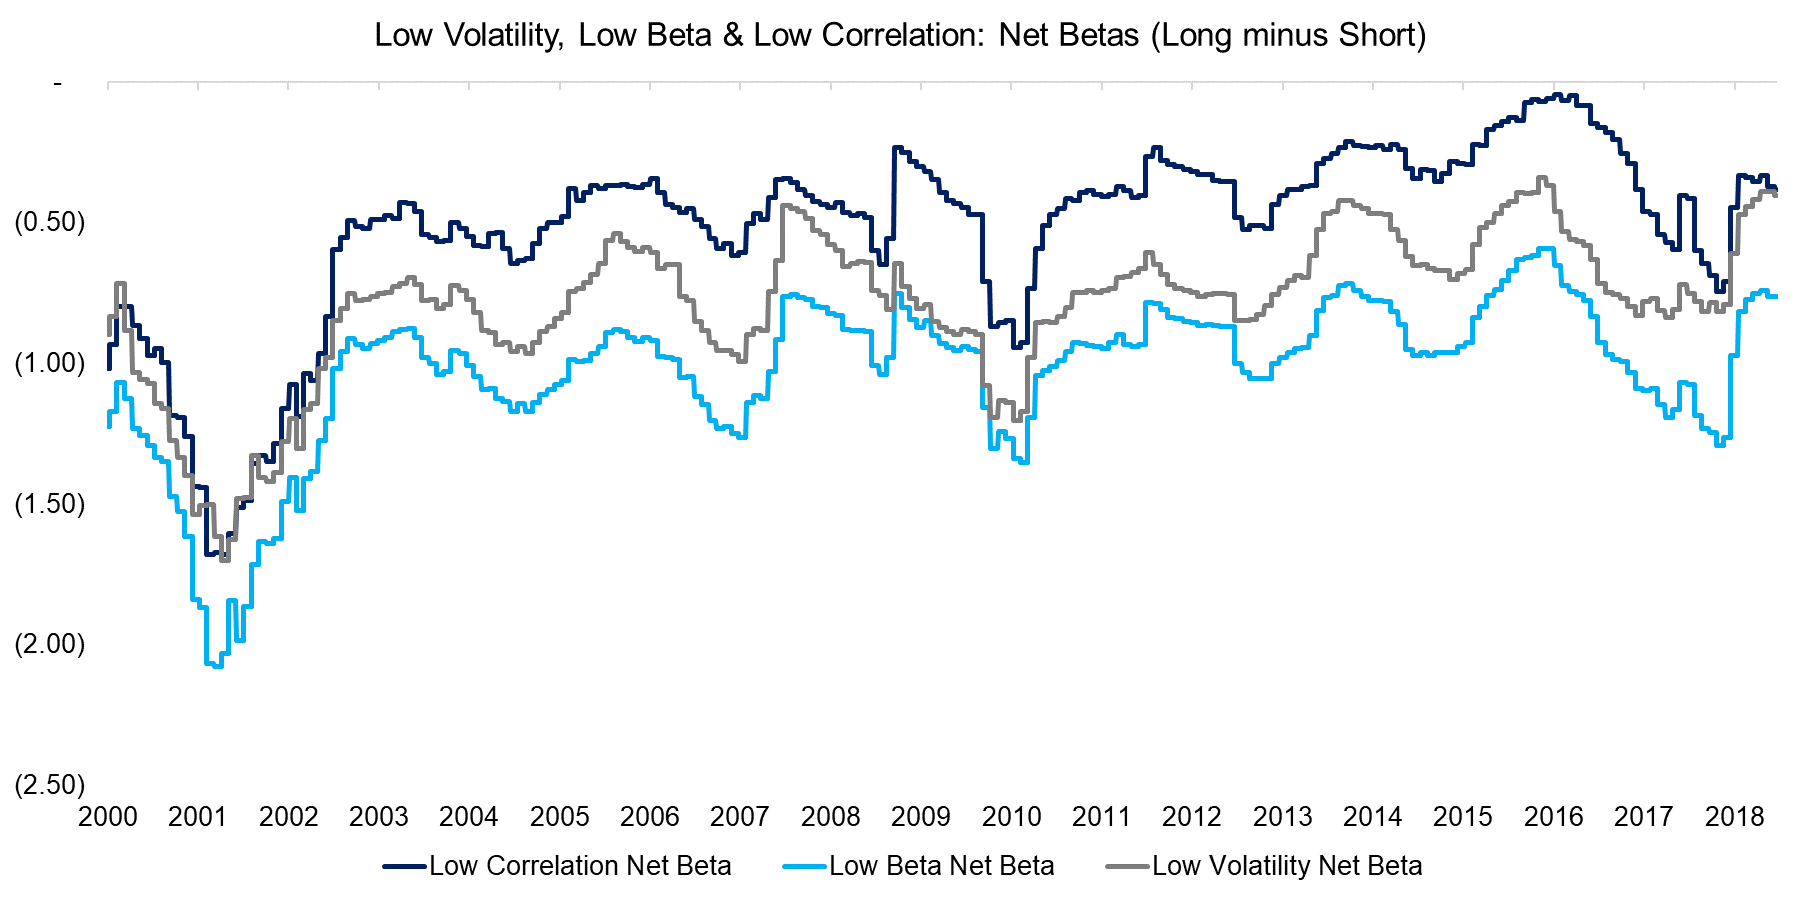 Low Volatility, Low Beta & Low Correlation Net Betas (Long minus Short)